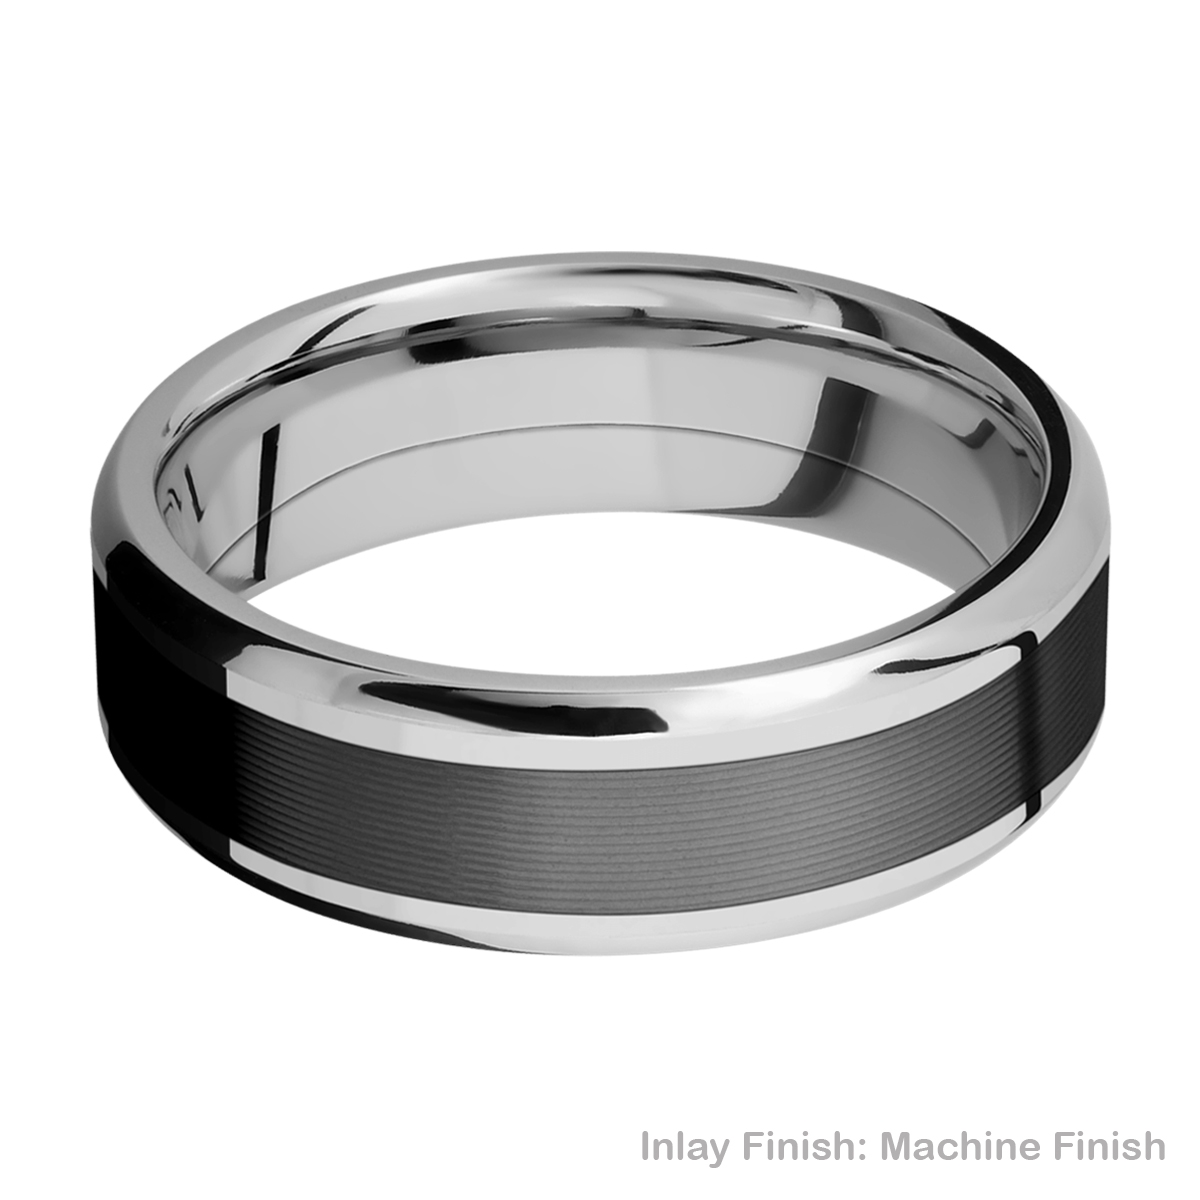 Lashbrook CCPF7B14(NS)/ZIRCONIUM Cobalt Chrome Wedding Ring or Band